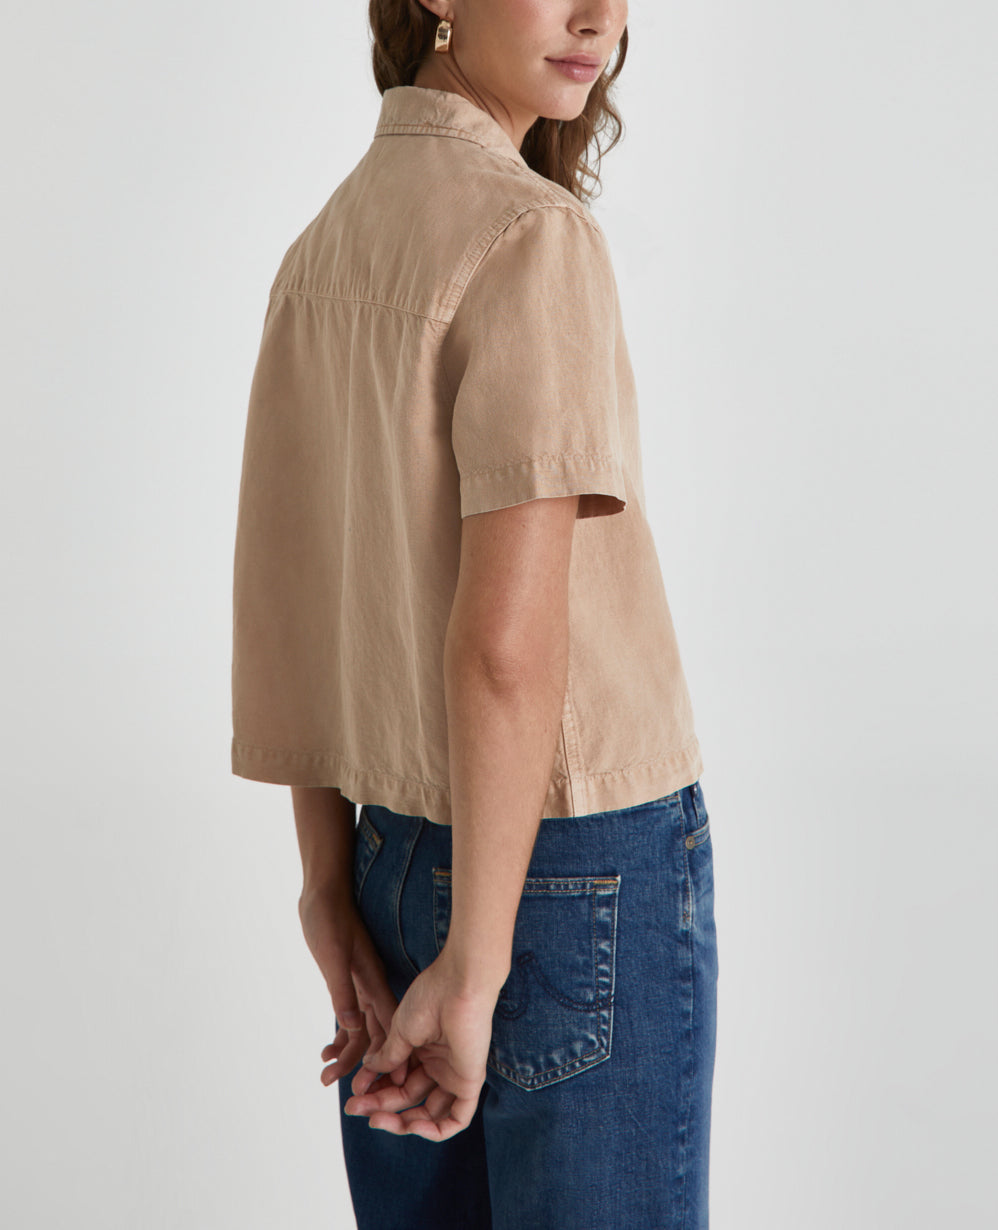 Brooklyn Cropped Shirt Sulfur X Mongoose Cropped Button Up Shirt Women Tops Photo 6